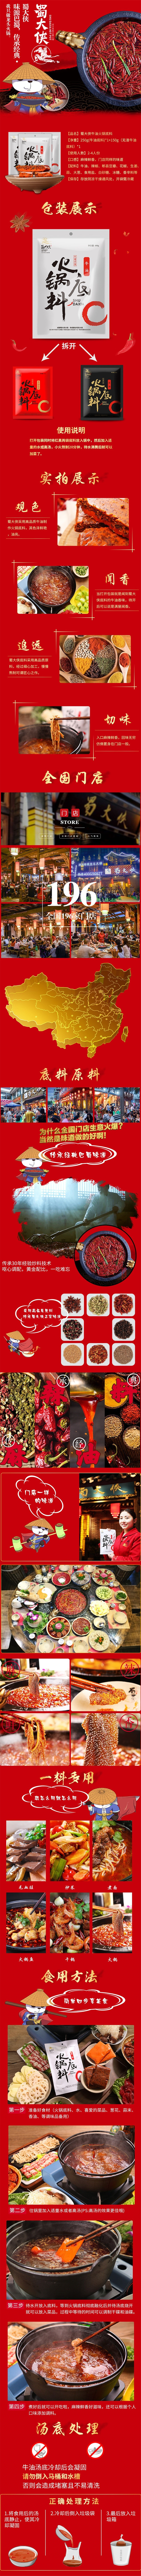 Chongqing hotpot seasoning 400gx3